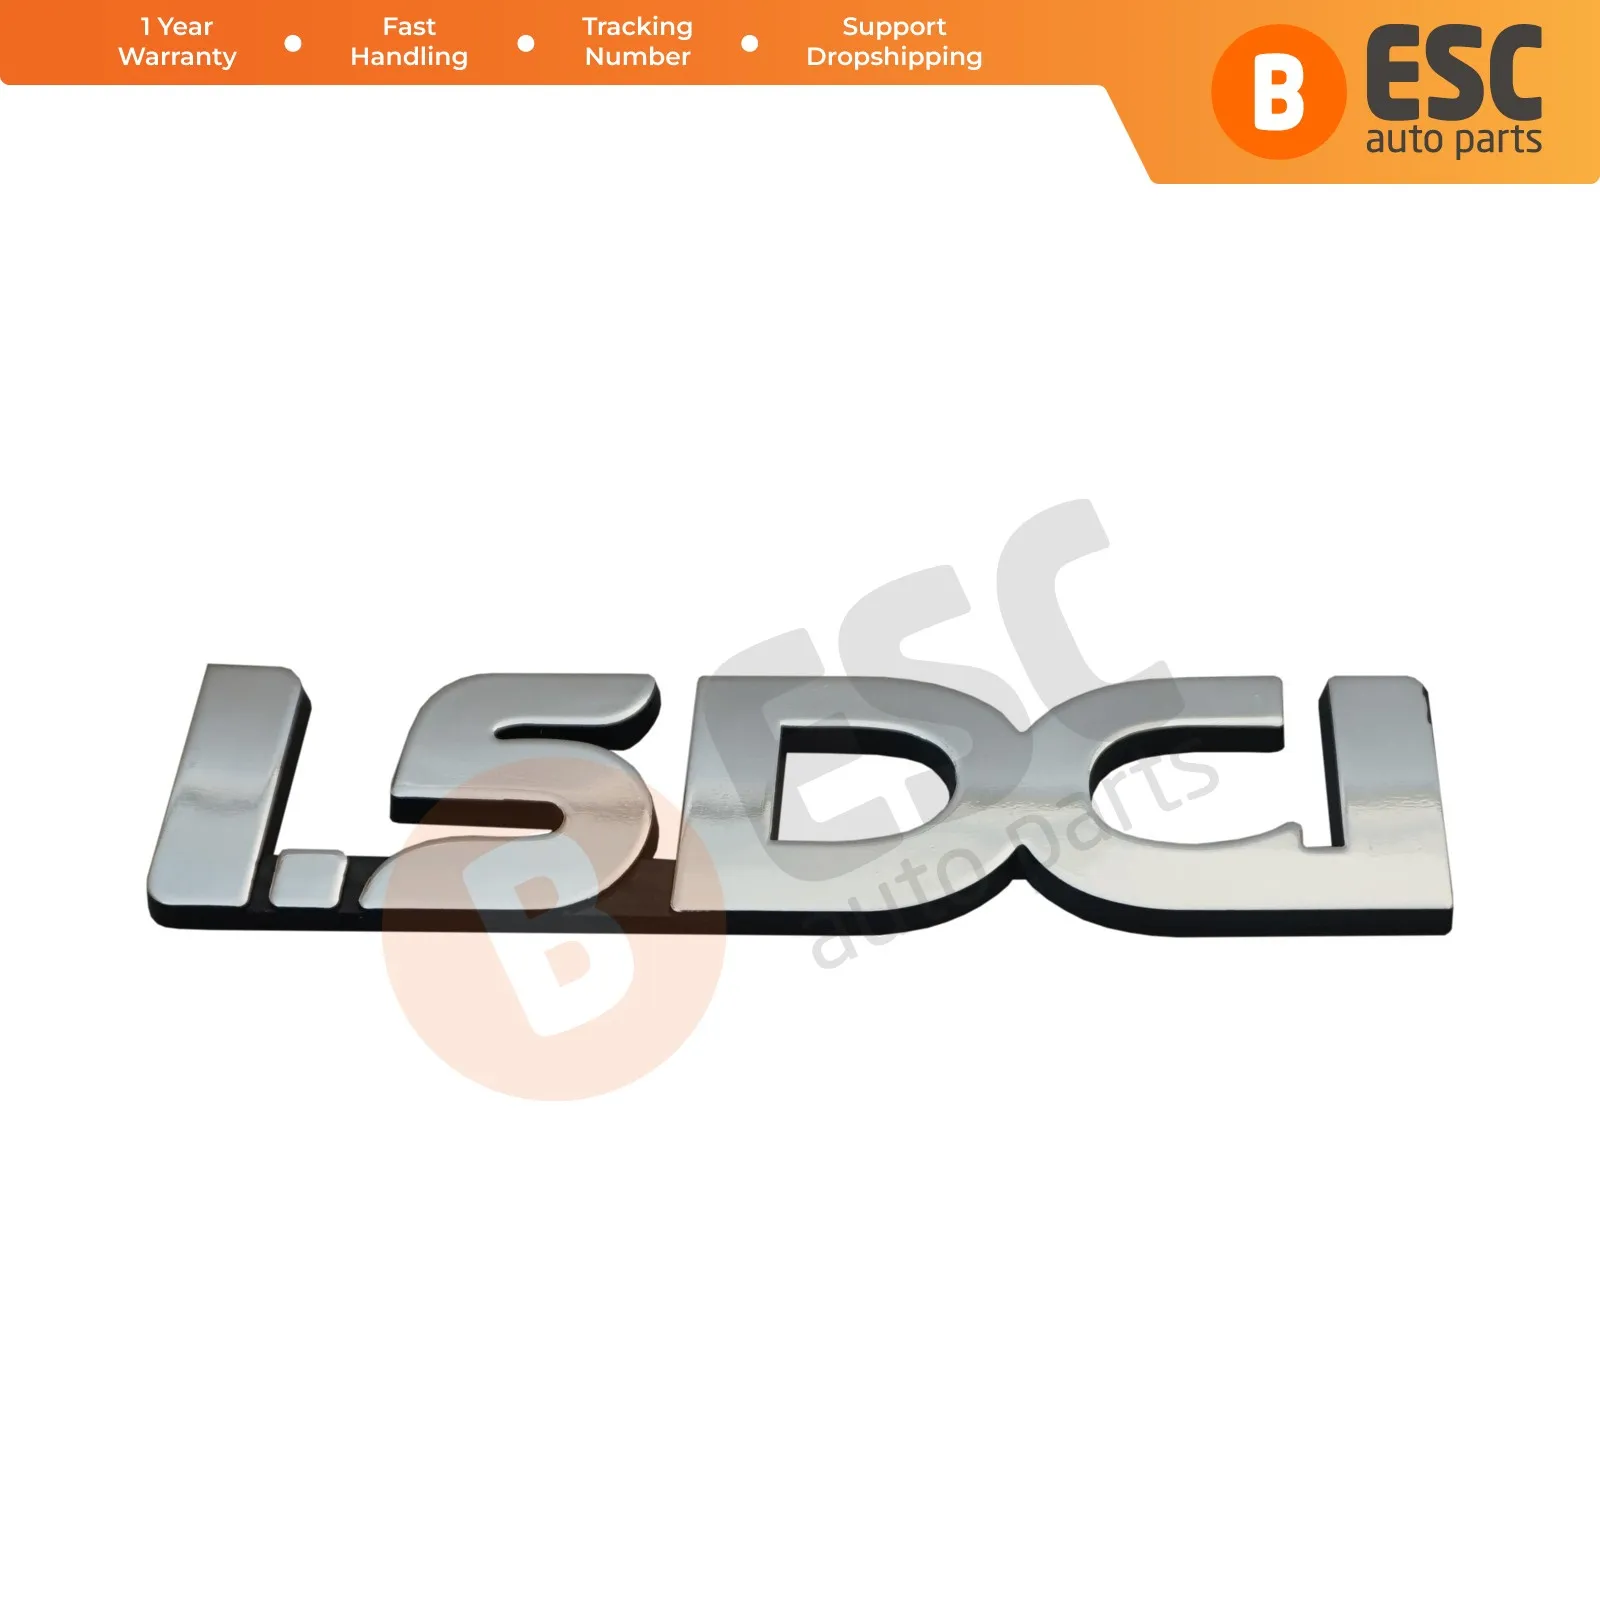 

ESC Auto Parts ESP570 Chrome 1.5 DCI Badge Monogram Emblem for Dacia Fast Shipment Ship From Turkey Free Shipment Made in Turkey